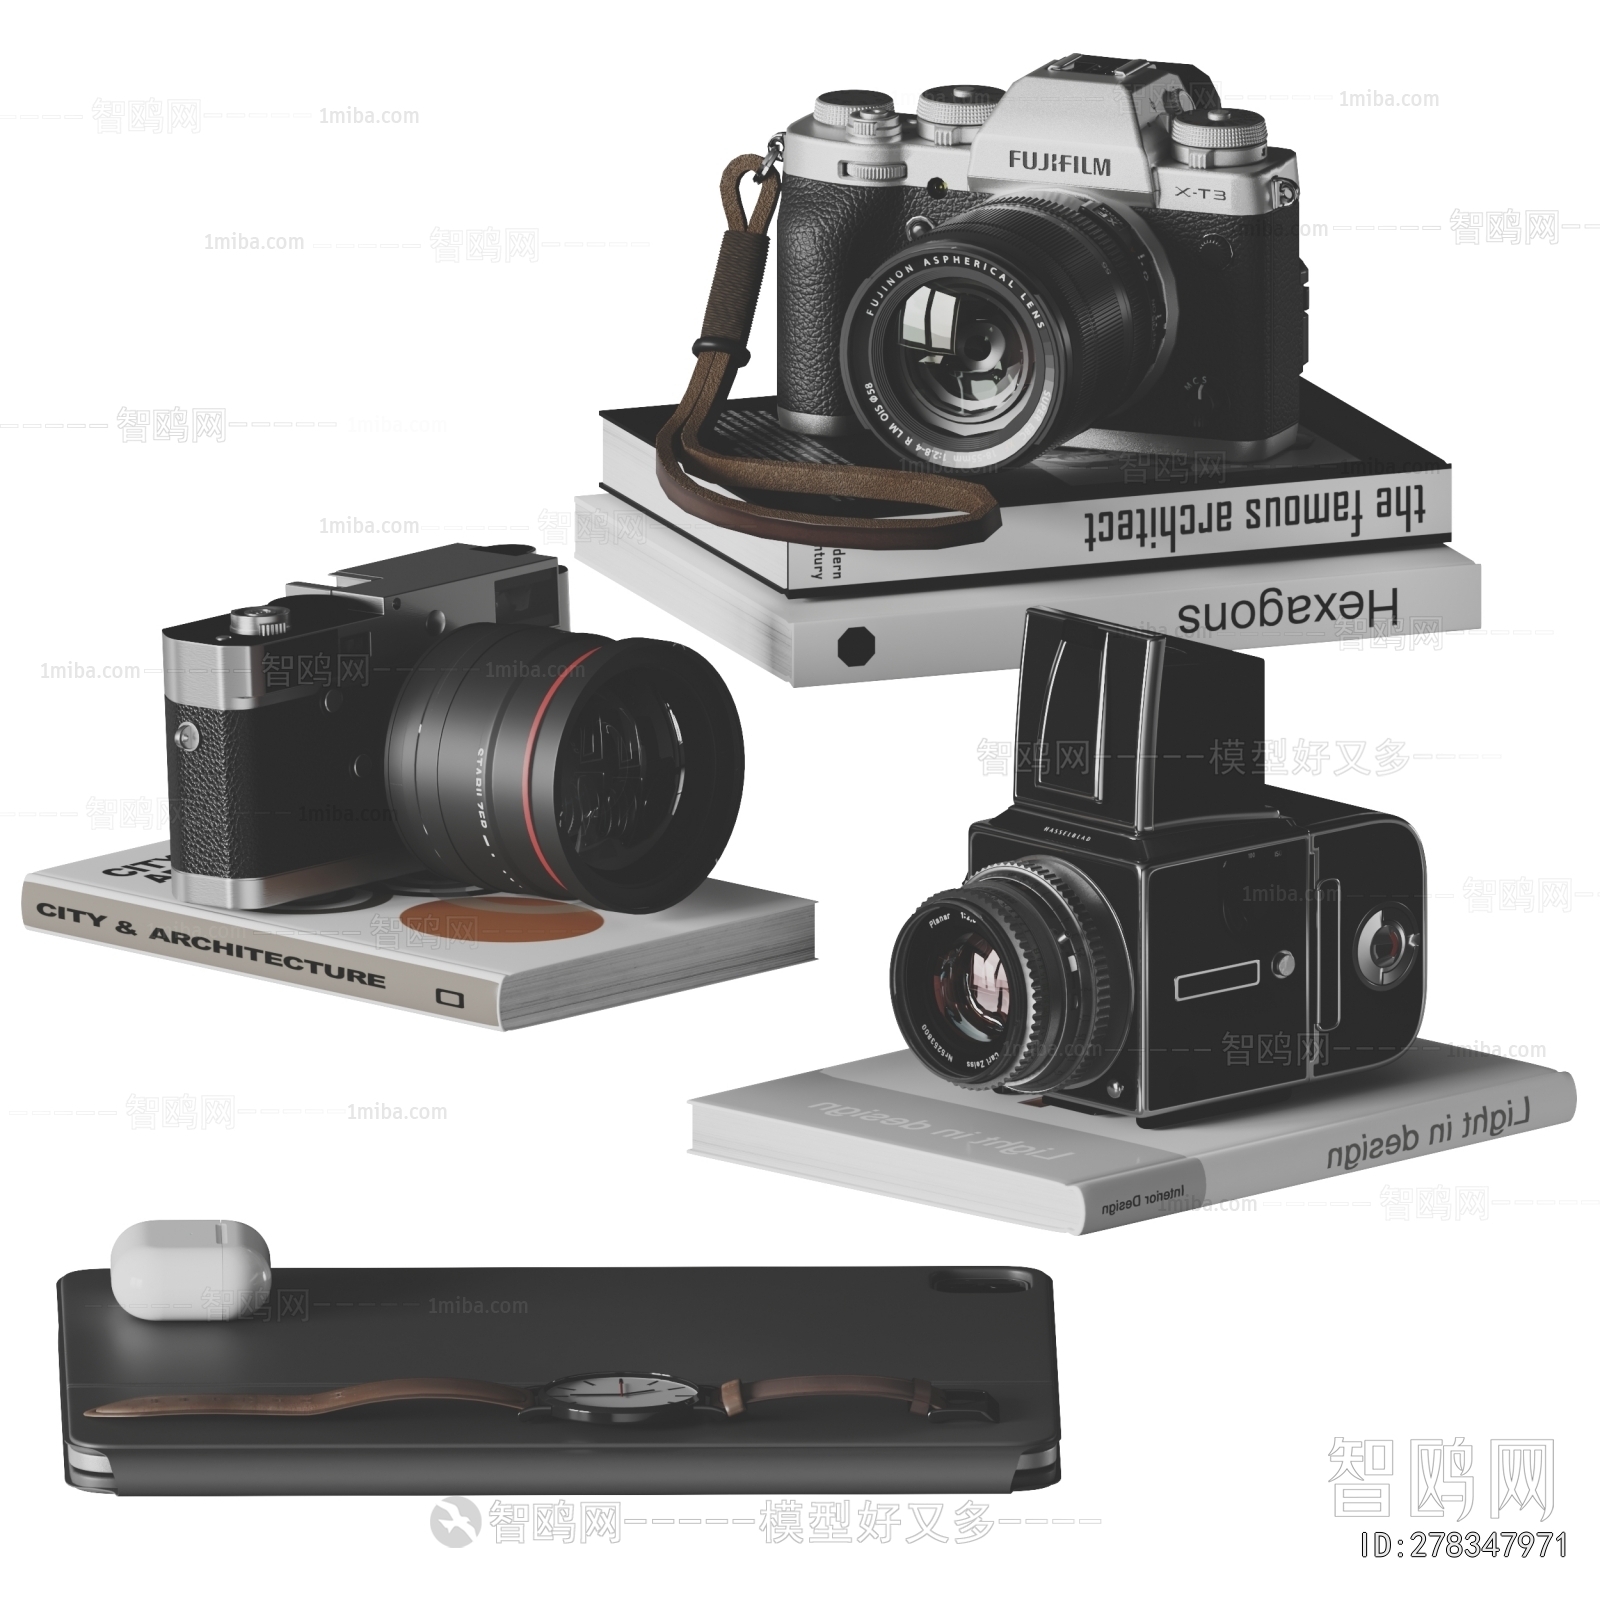 Modern Digital Camera